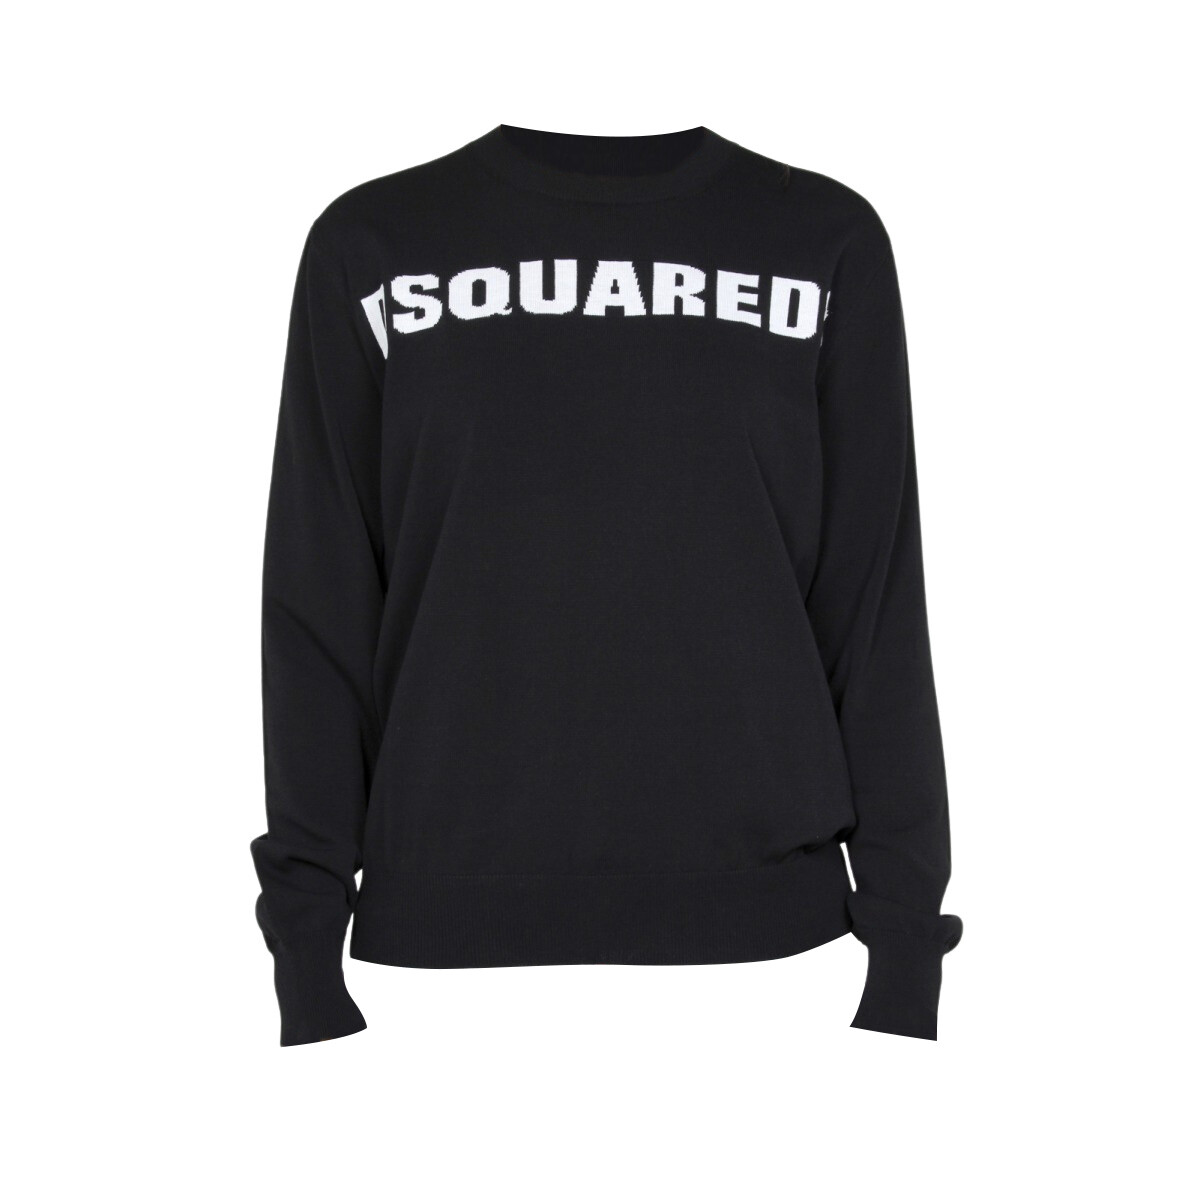 dsquared2 sweater sale